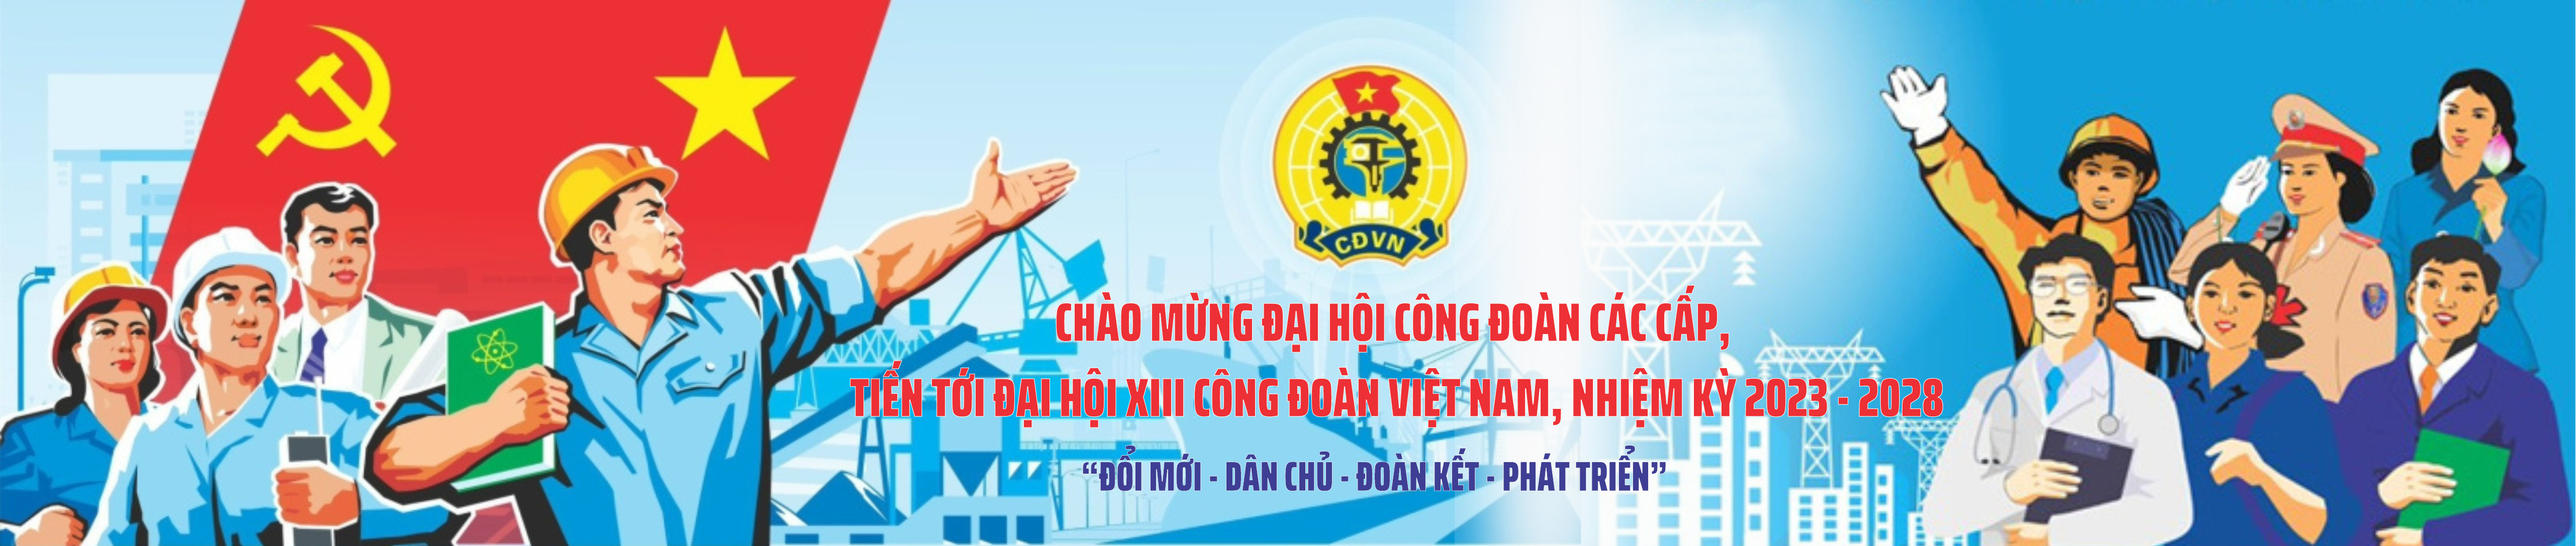 dai-hoi-cong-doan-cac-cap-nhiem-ky-2023-2028